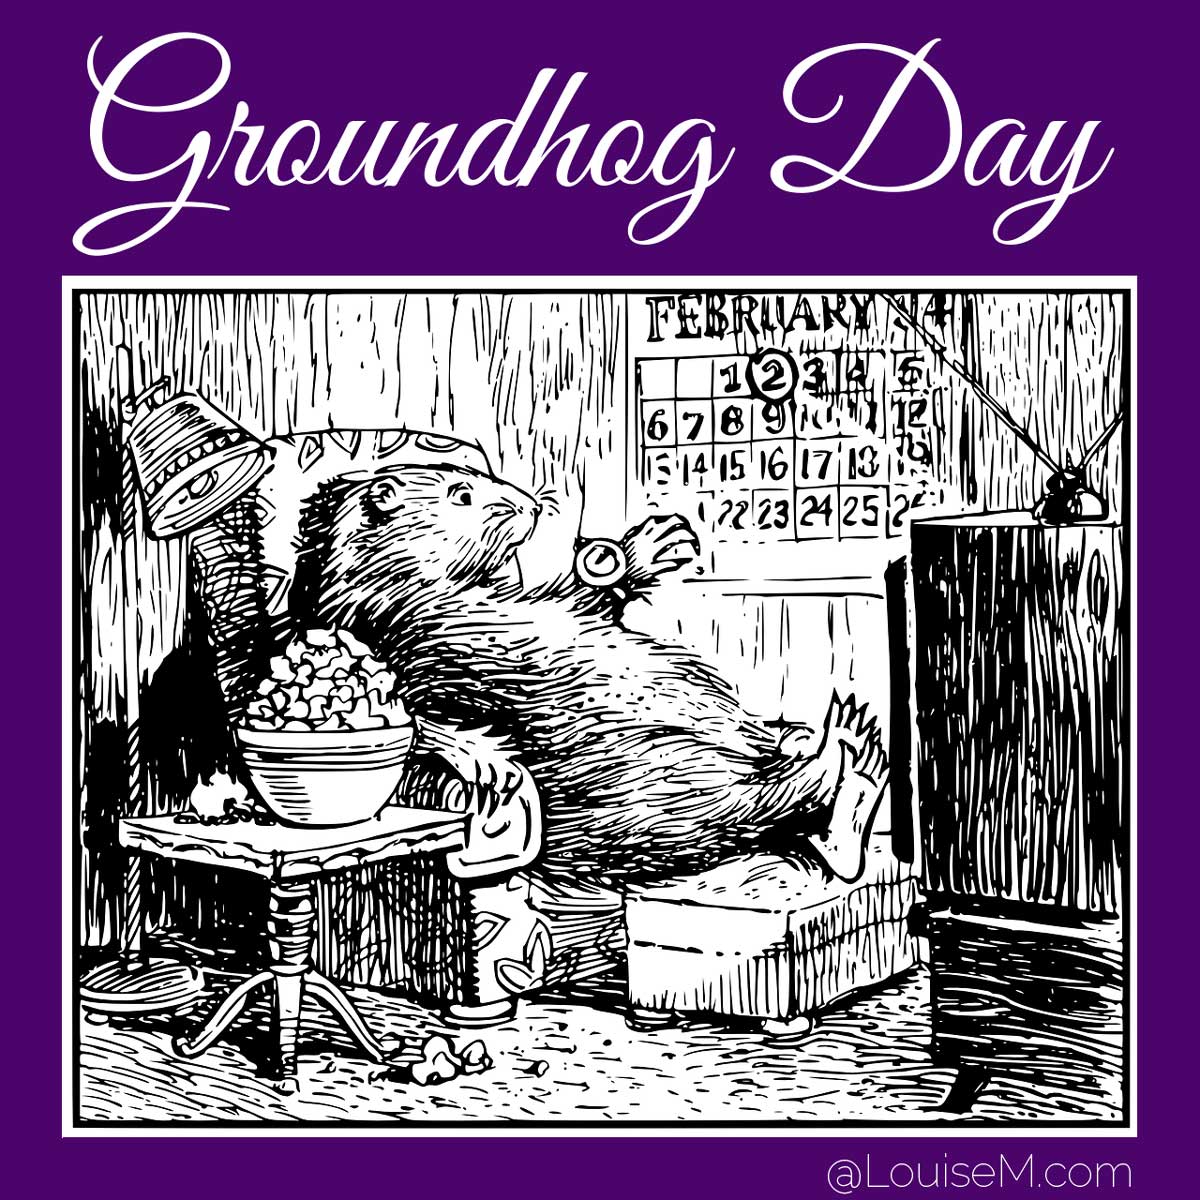 vintage art of groundhog with script saying groundhog day.